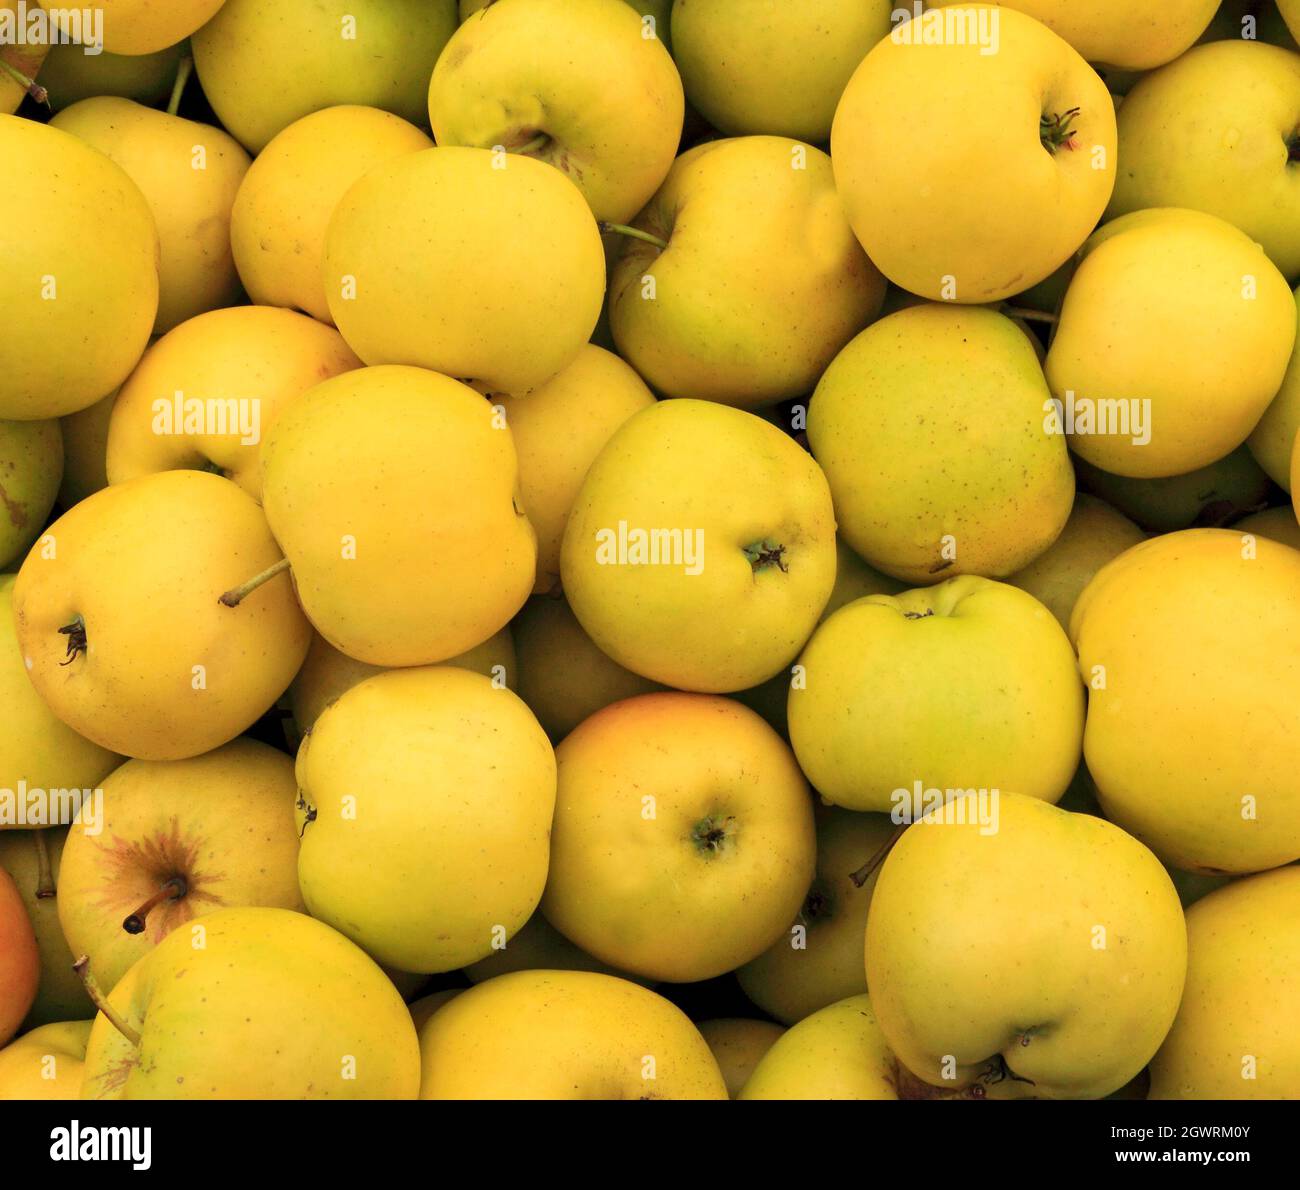 Apfel 'Greensleeves', Farm Shop Display, Obst, Äpfel, gesunde Ernährung Stockfoto